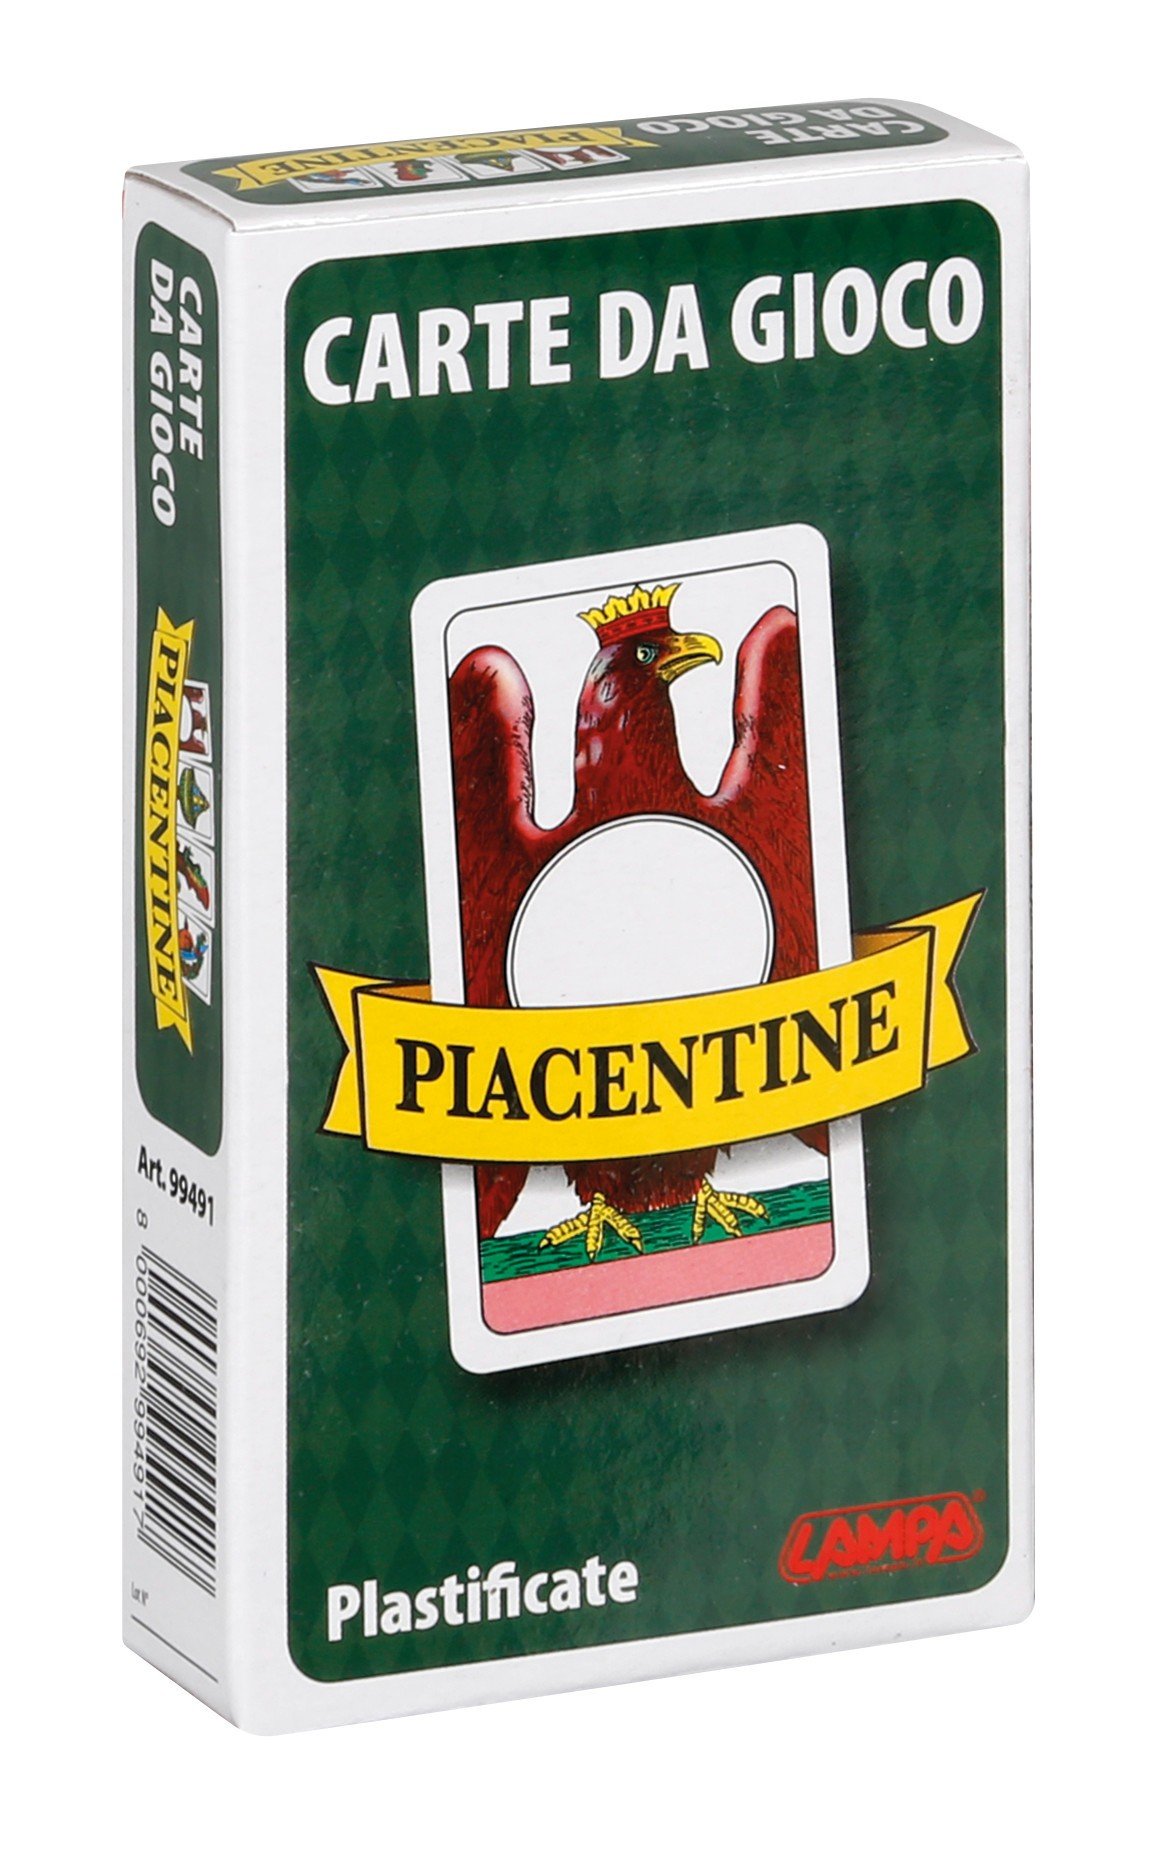 Carte da gioco Piacentine - Carta plastificata